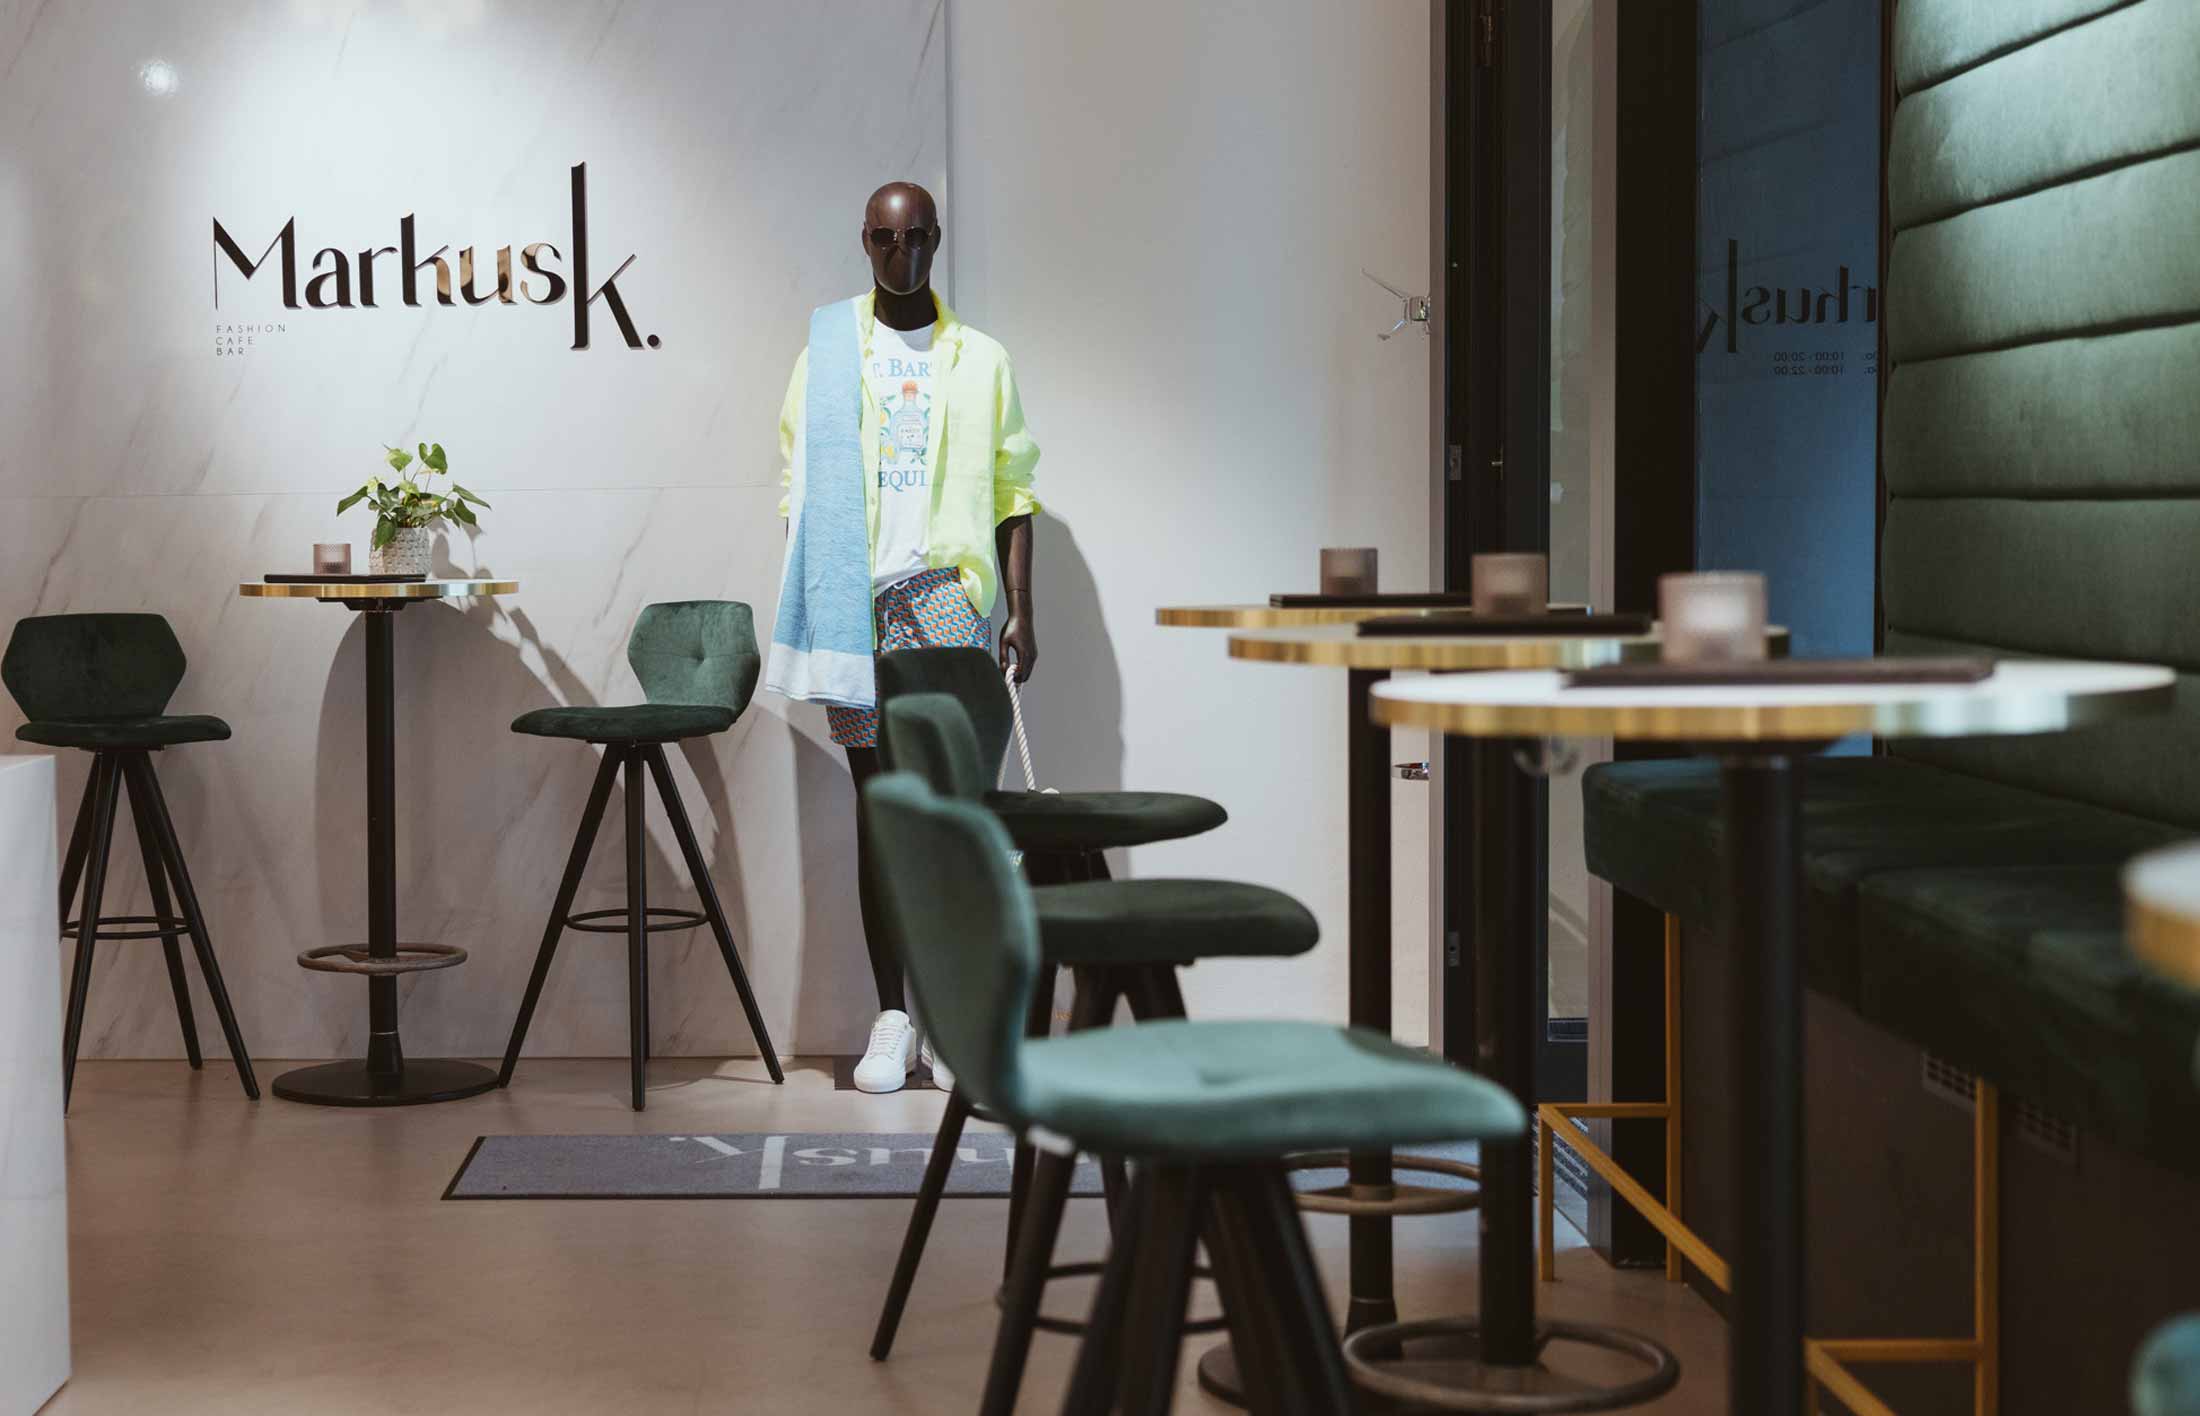 Fashion, Café und Bar: "Markus K."